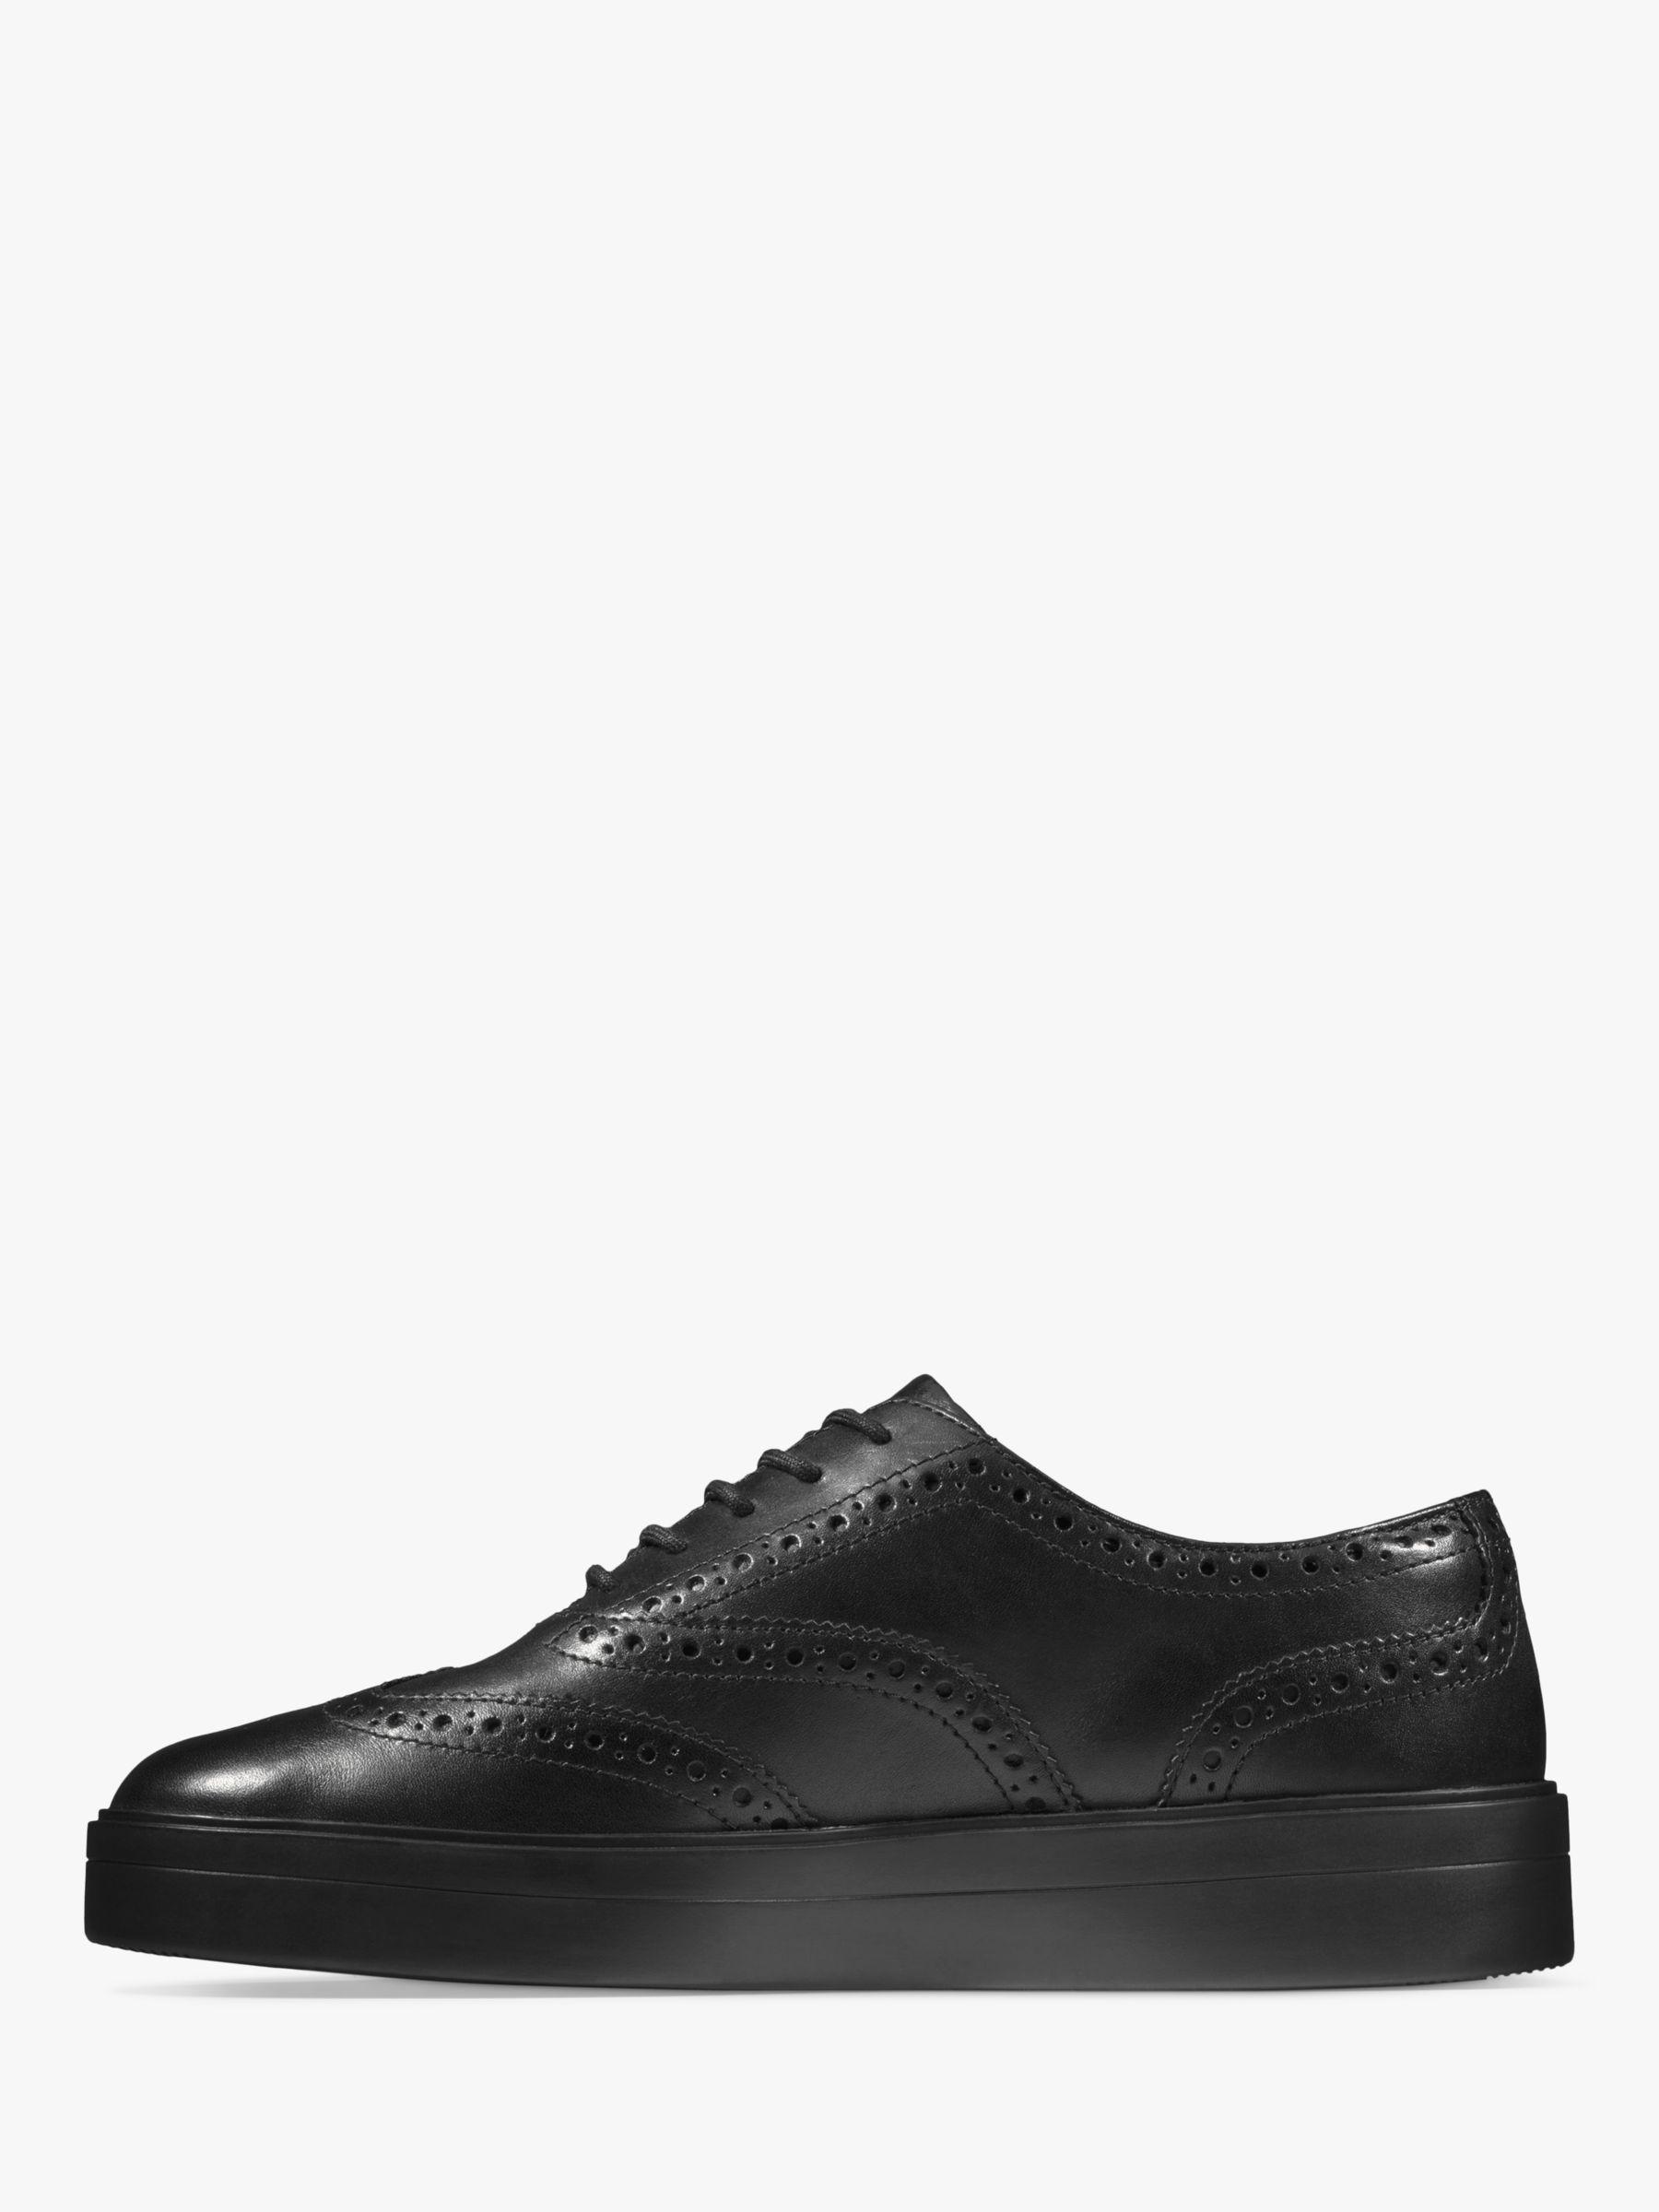 clarks black brogue shoes